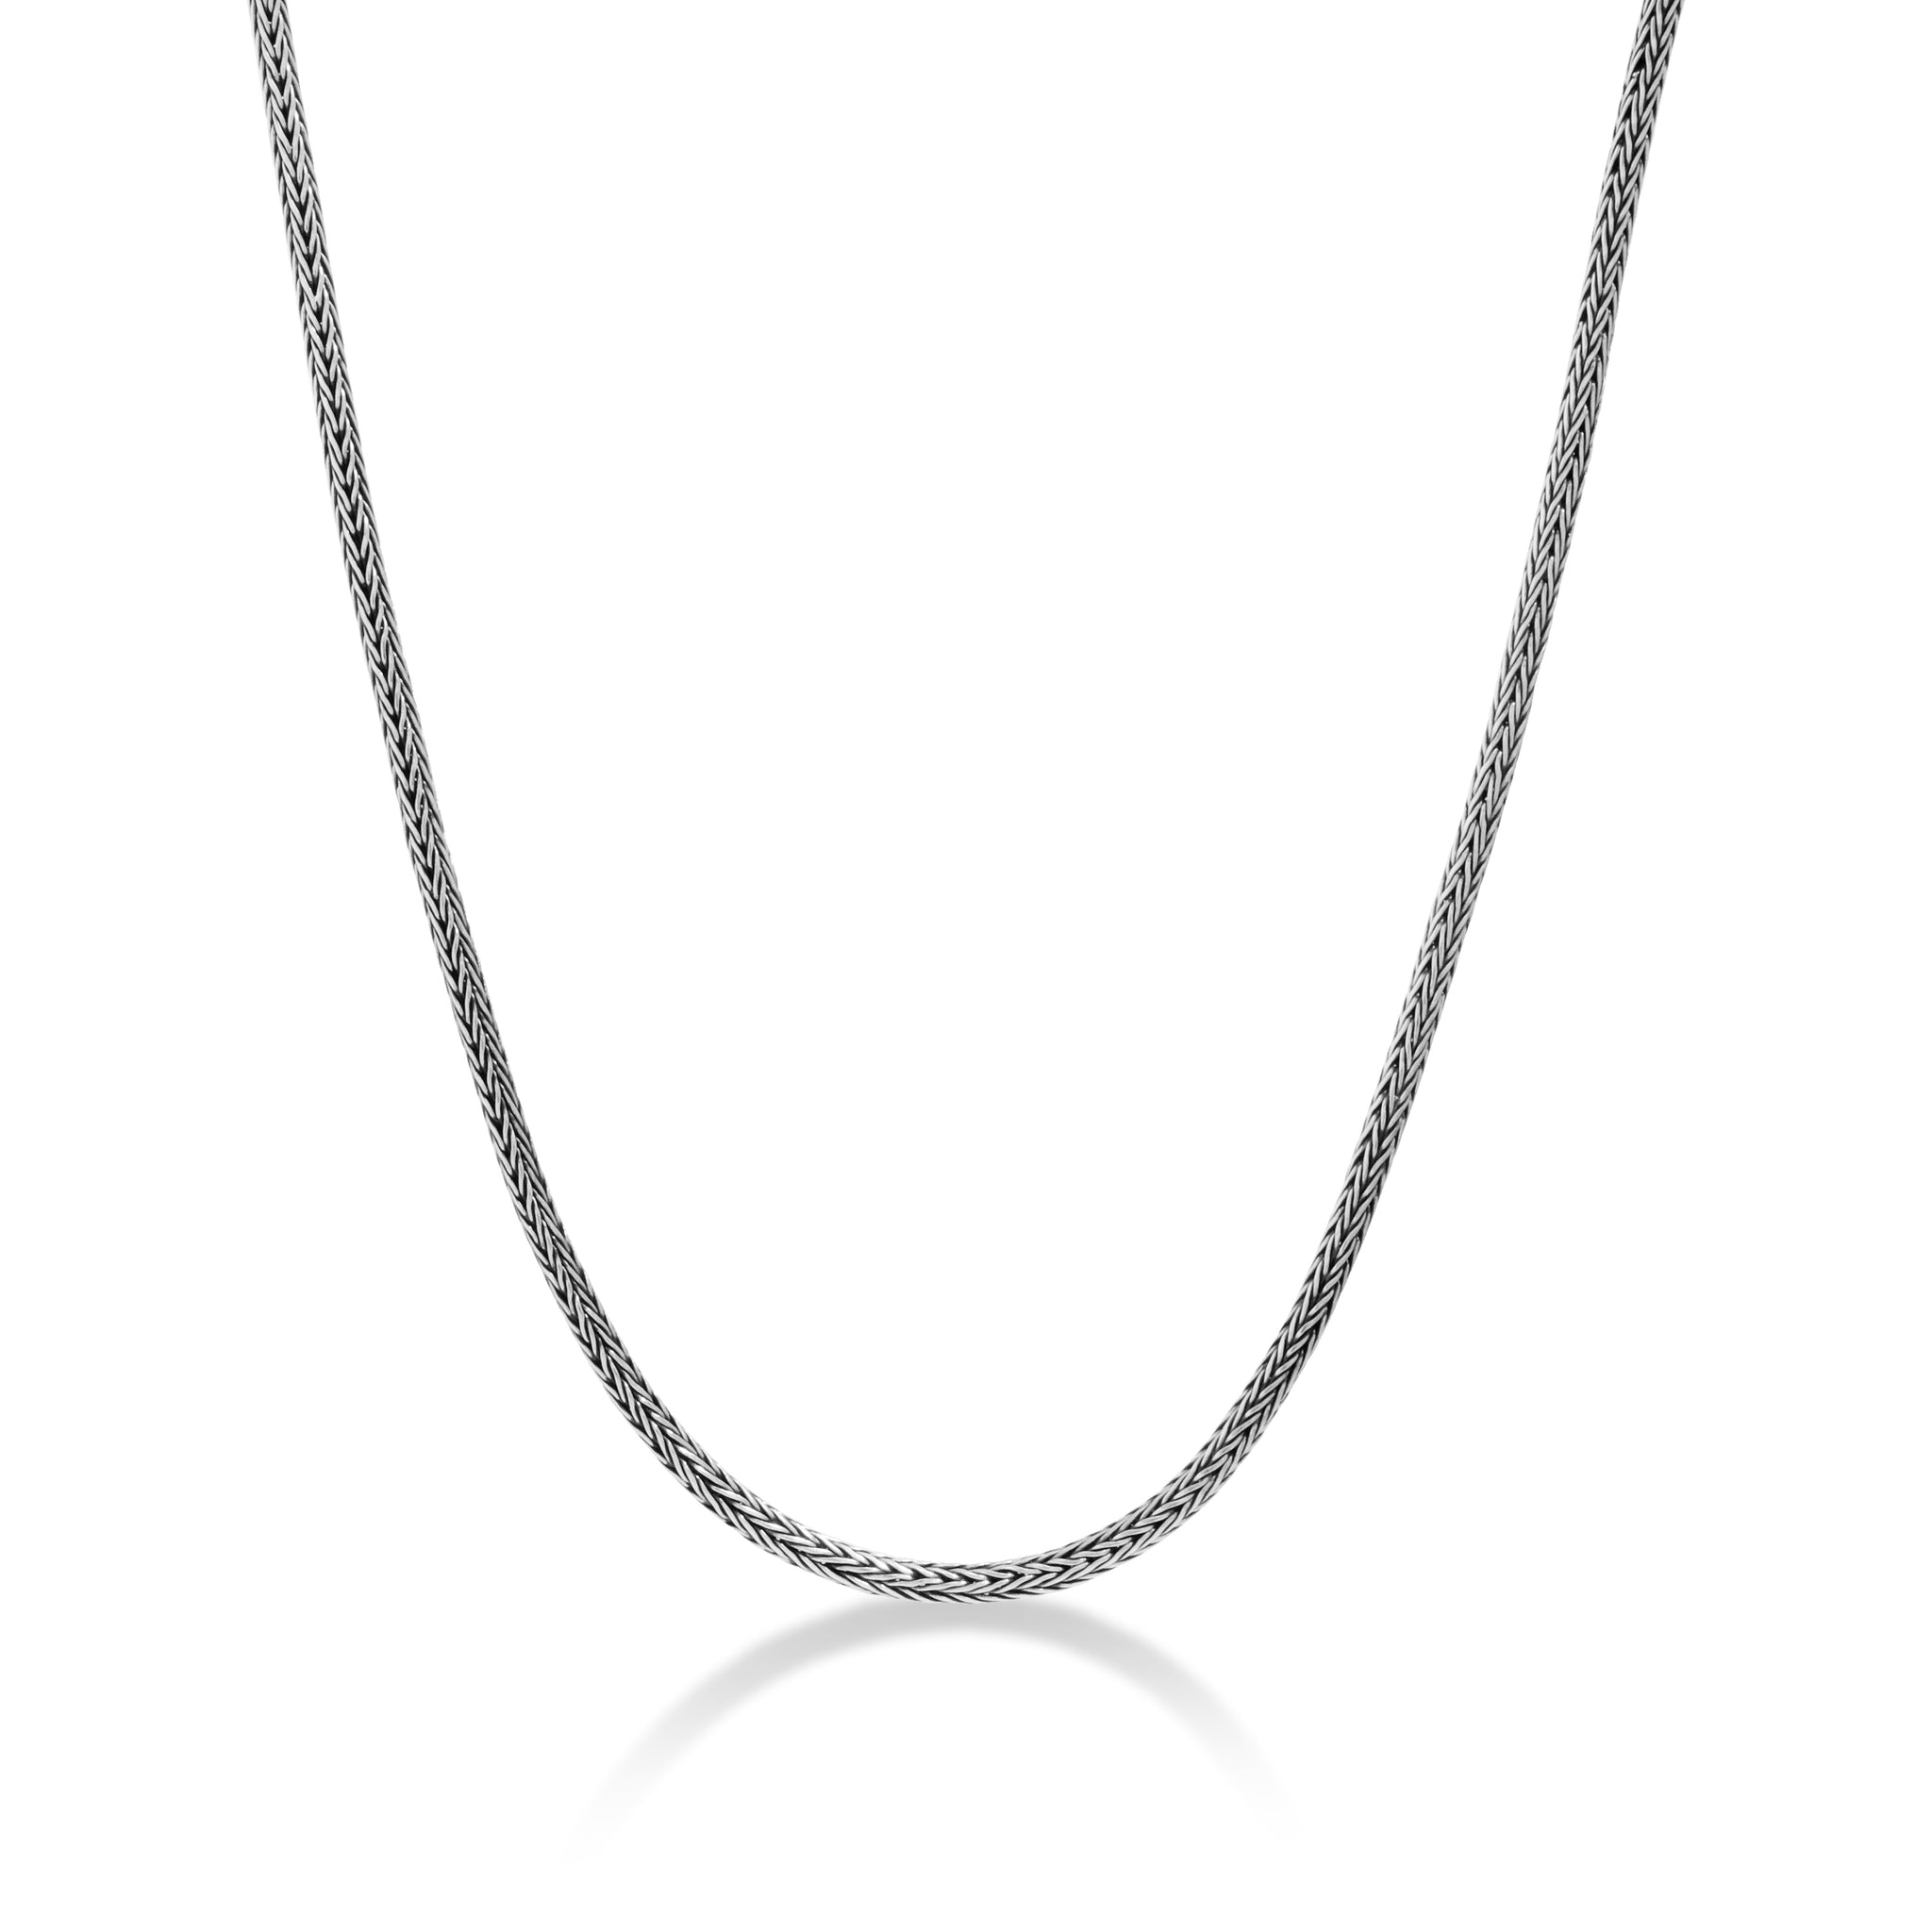 Nakula 925 Silver Webbing Chain Necklace Sutramala Collection Sunaka Jewelry